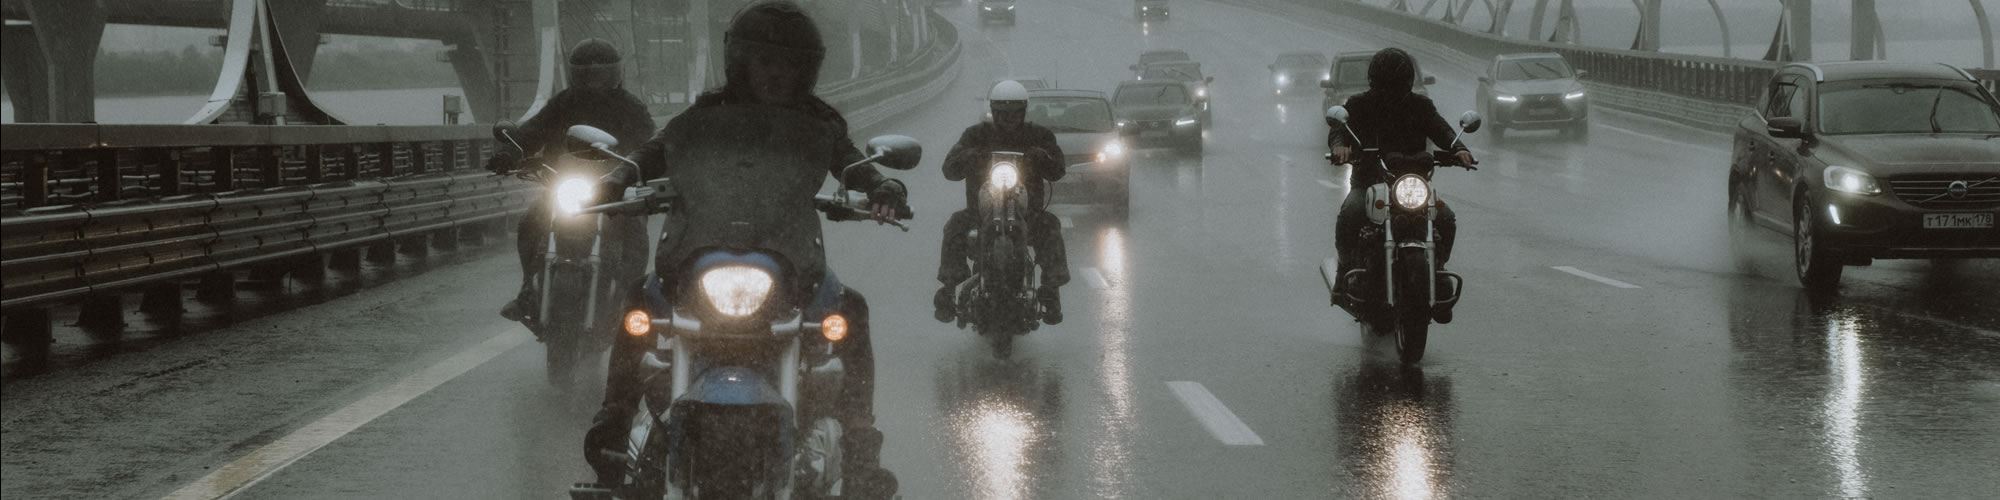 Condicir moto bajo la lluvia